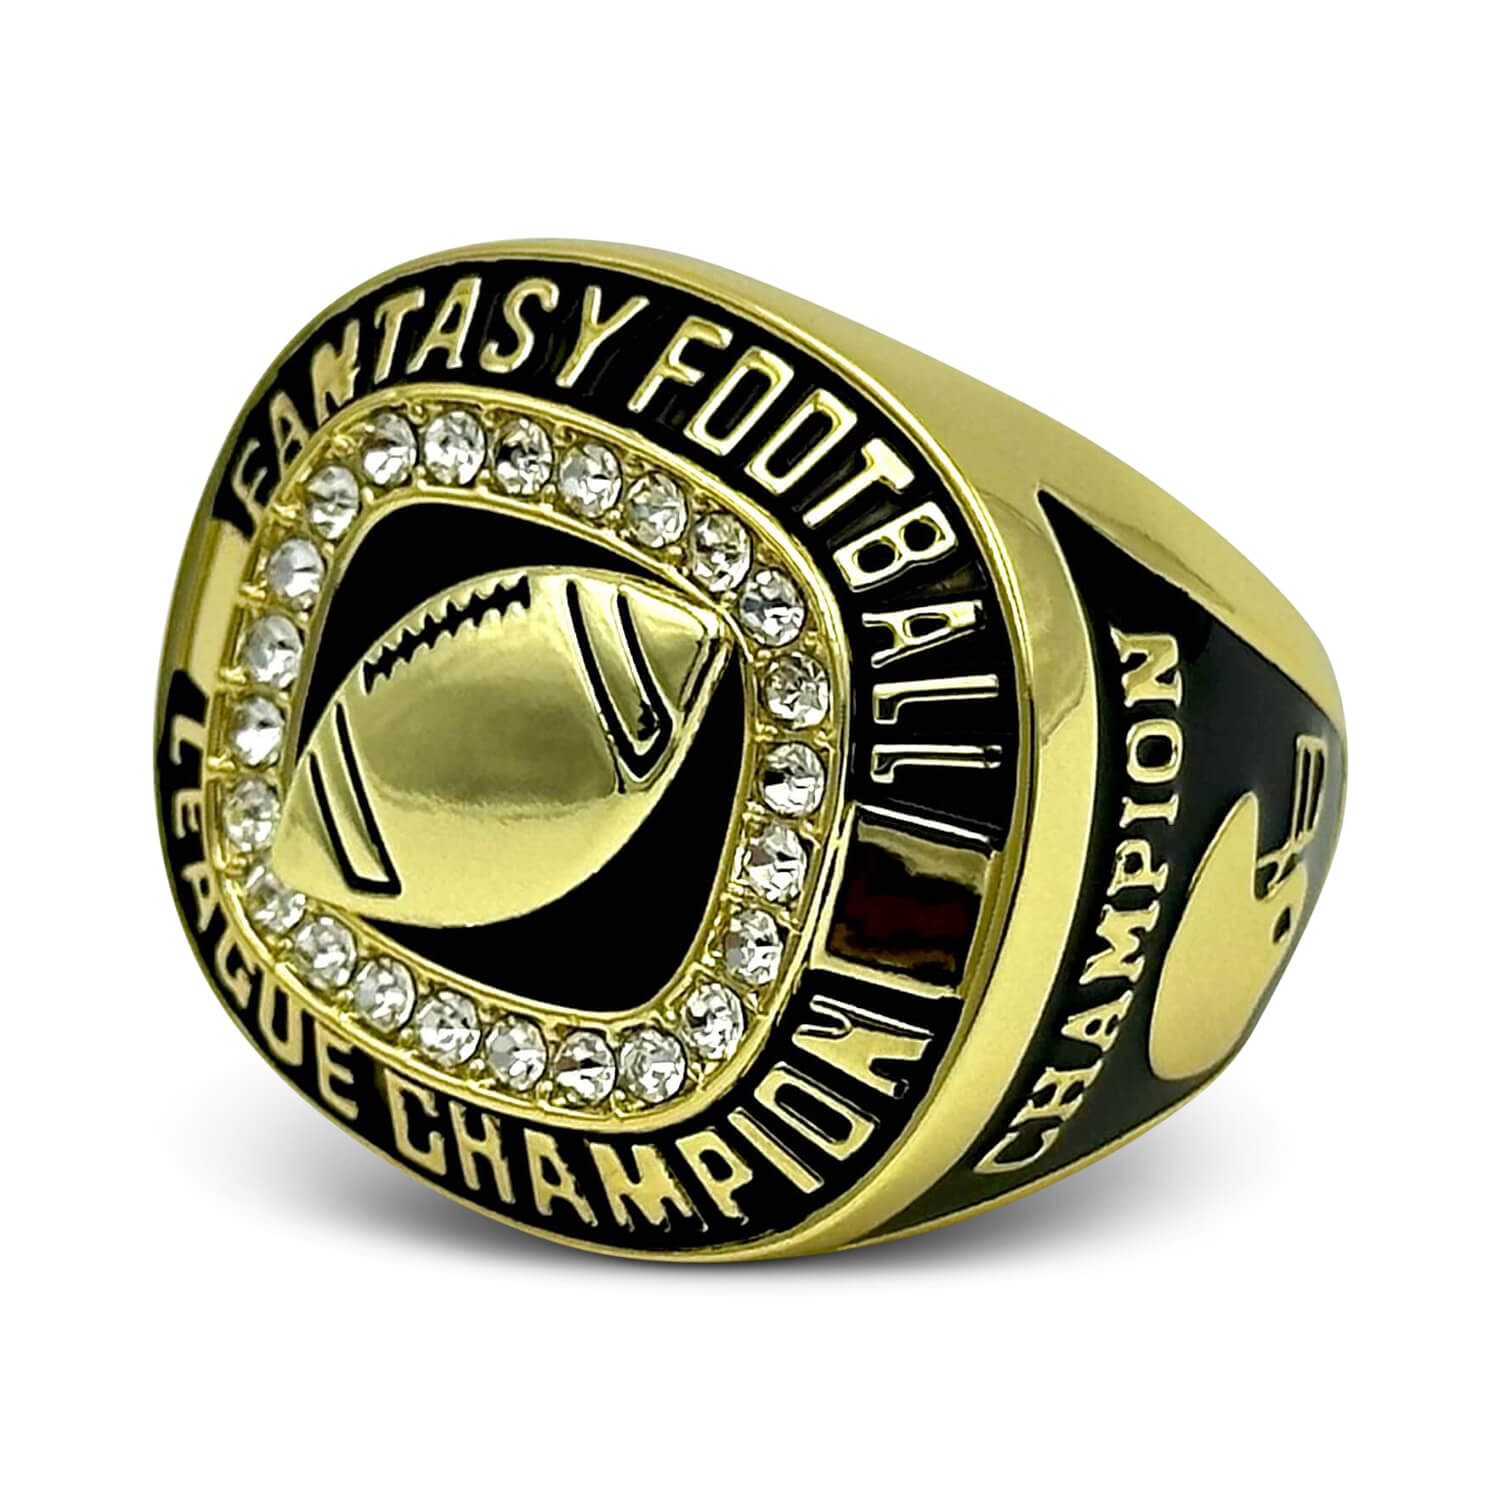 "The Prospect" Fantasy Football Championship Ring